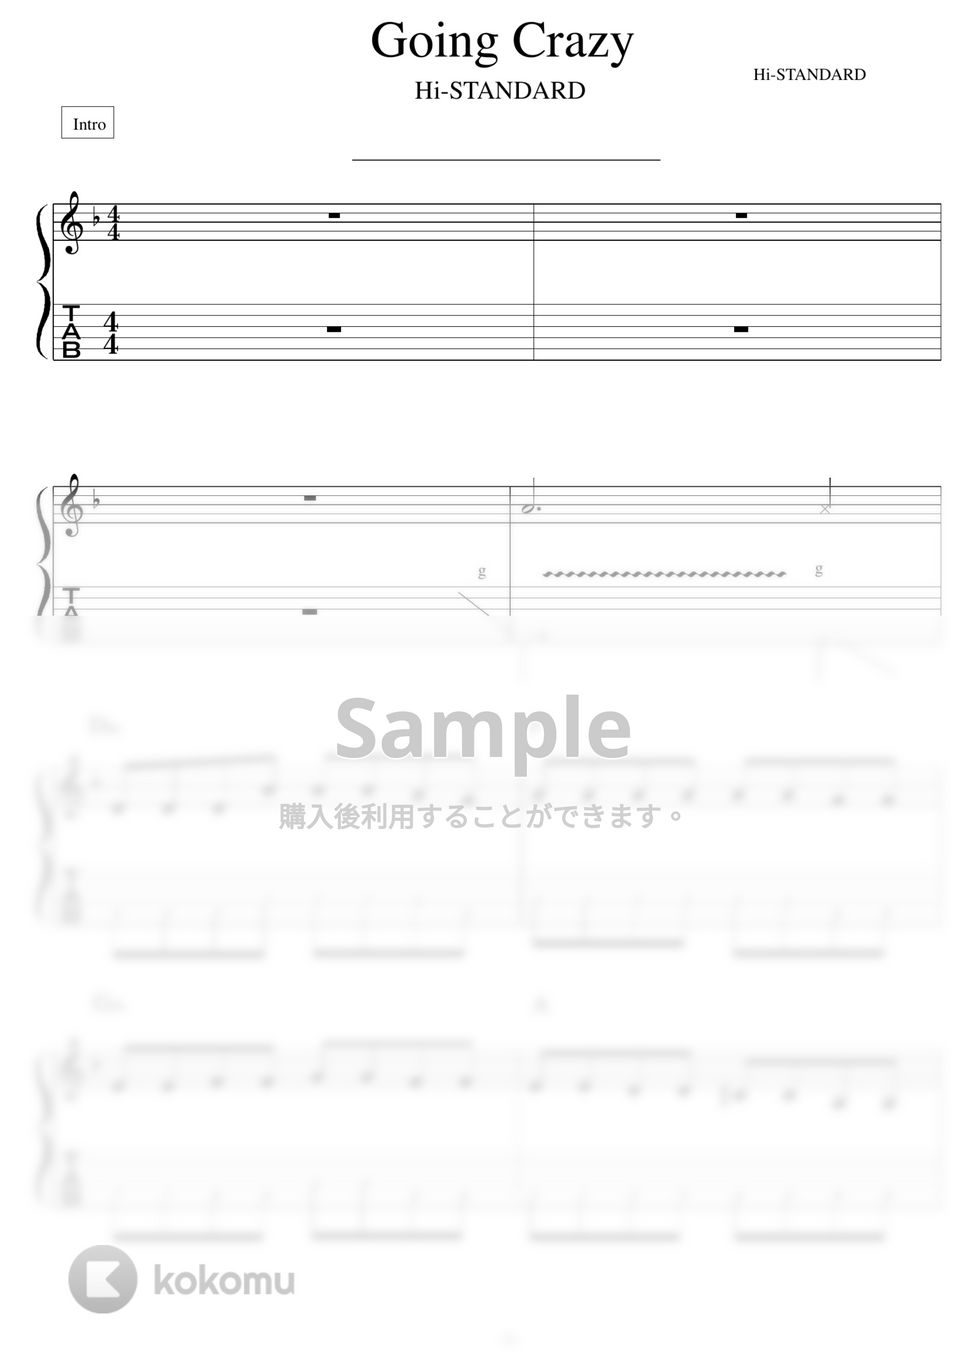 Hi-STANDARD - Going Crazy ギター演奏動画付TAB譜 by バイトーン音楽教室